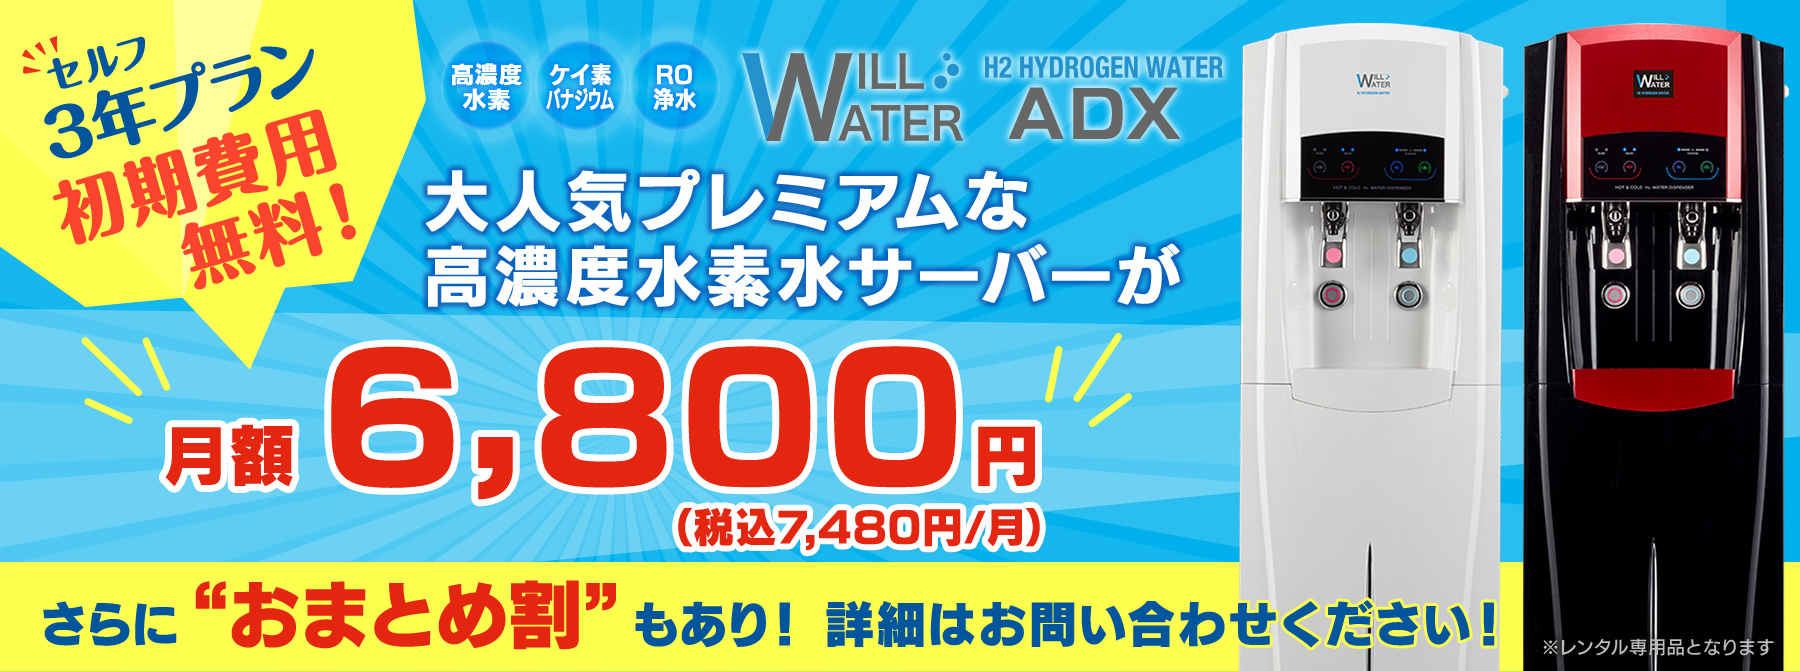 WILL WATER ADX 3年セルフプラン